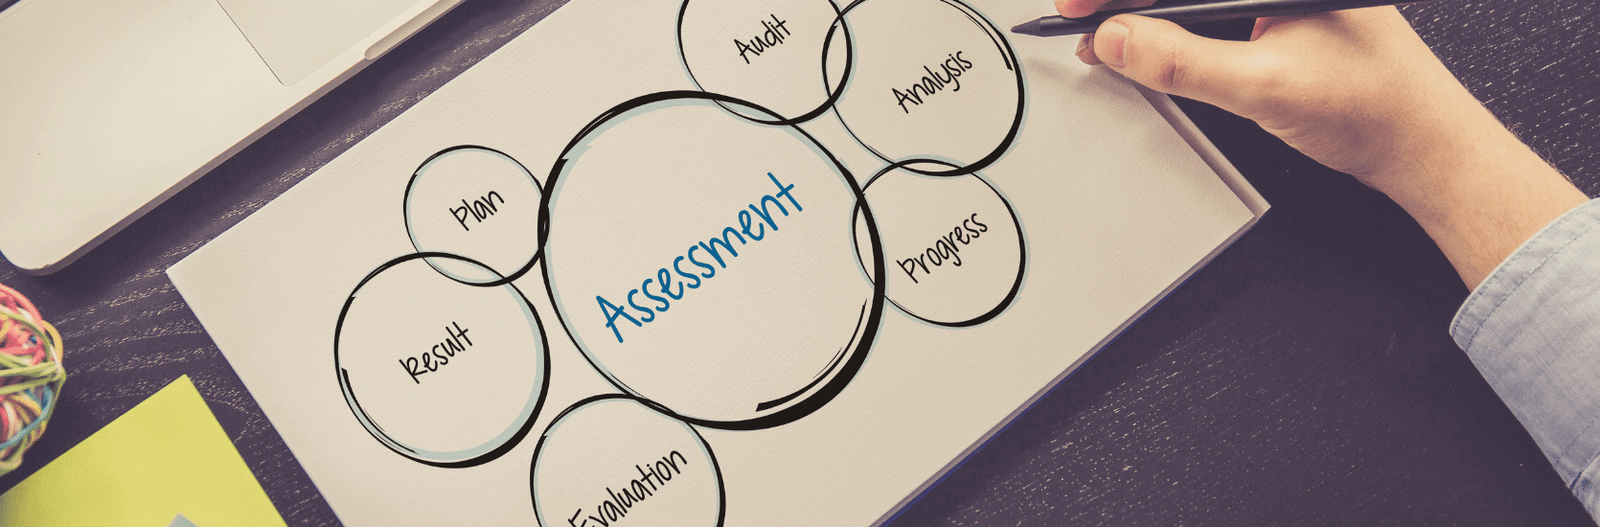 IT-Assessment-banner